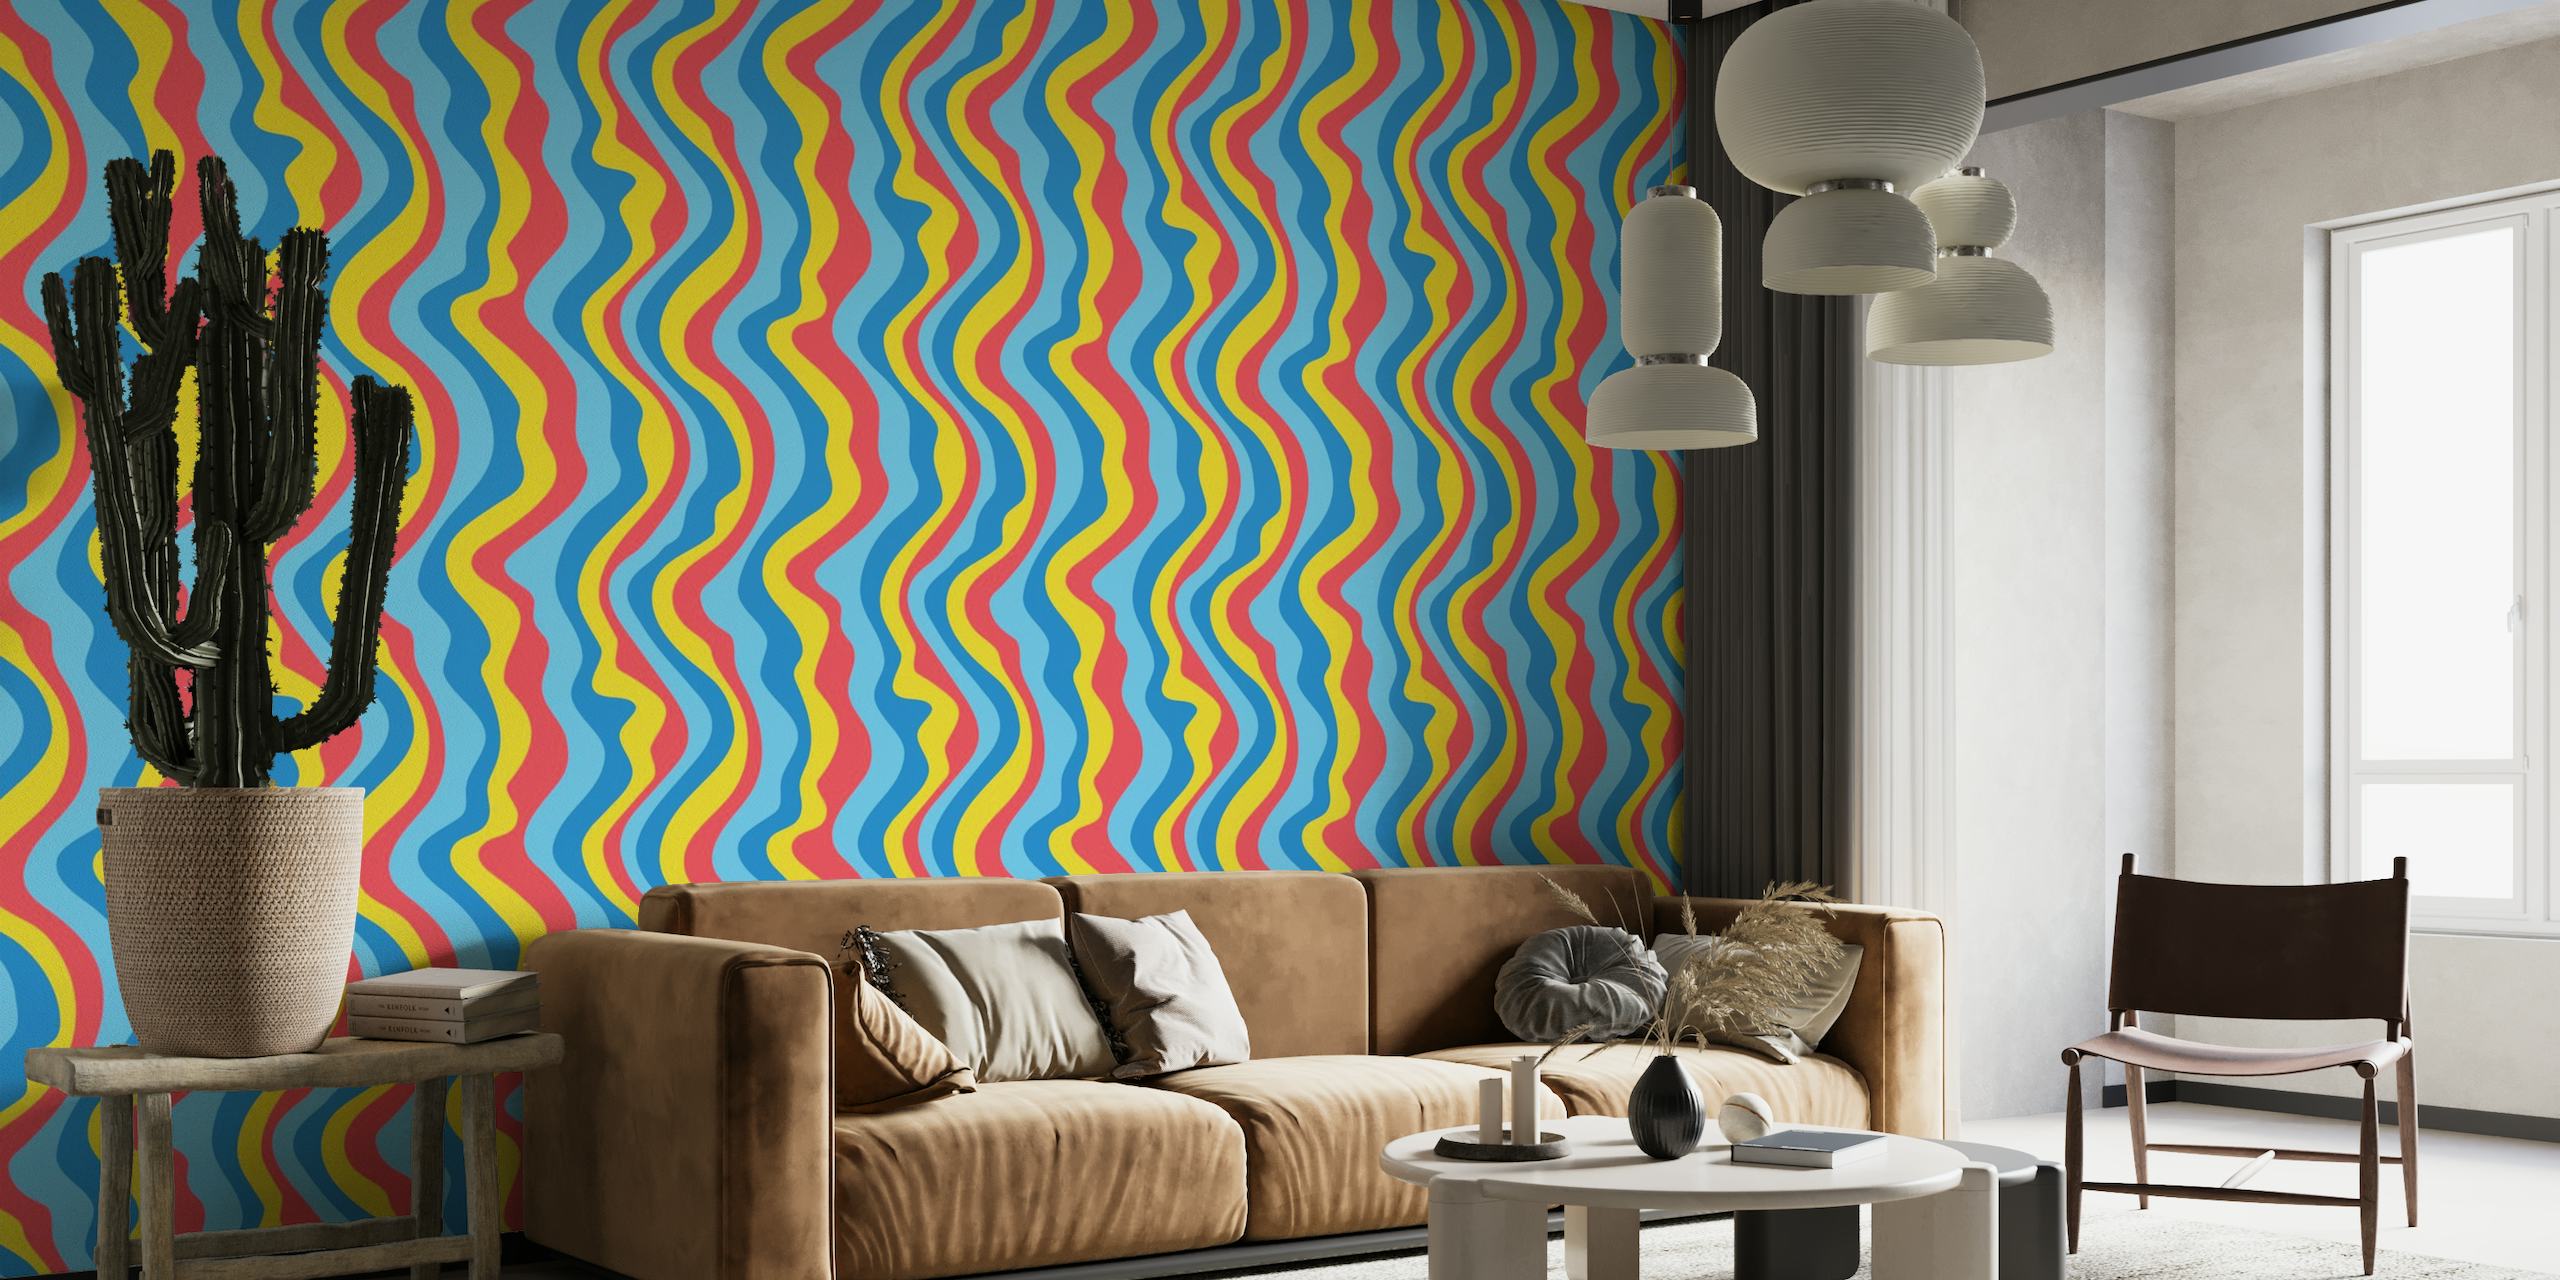 Šareni dizajn zidnih slika 'GOOD VIBRATIONS Mod Wavy Stripes Blue Yellow' s valovitim linijama nadahnutim retro stilom.